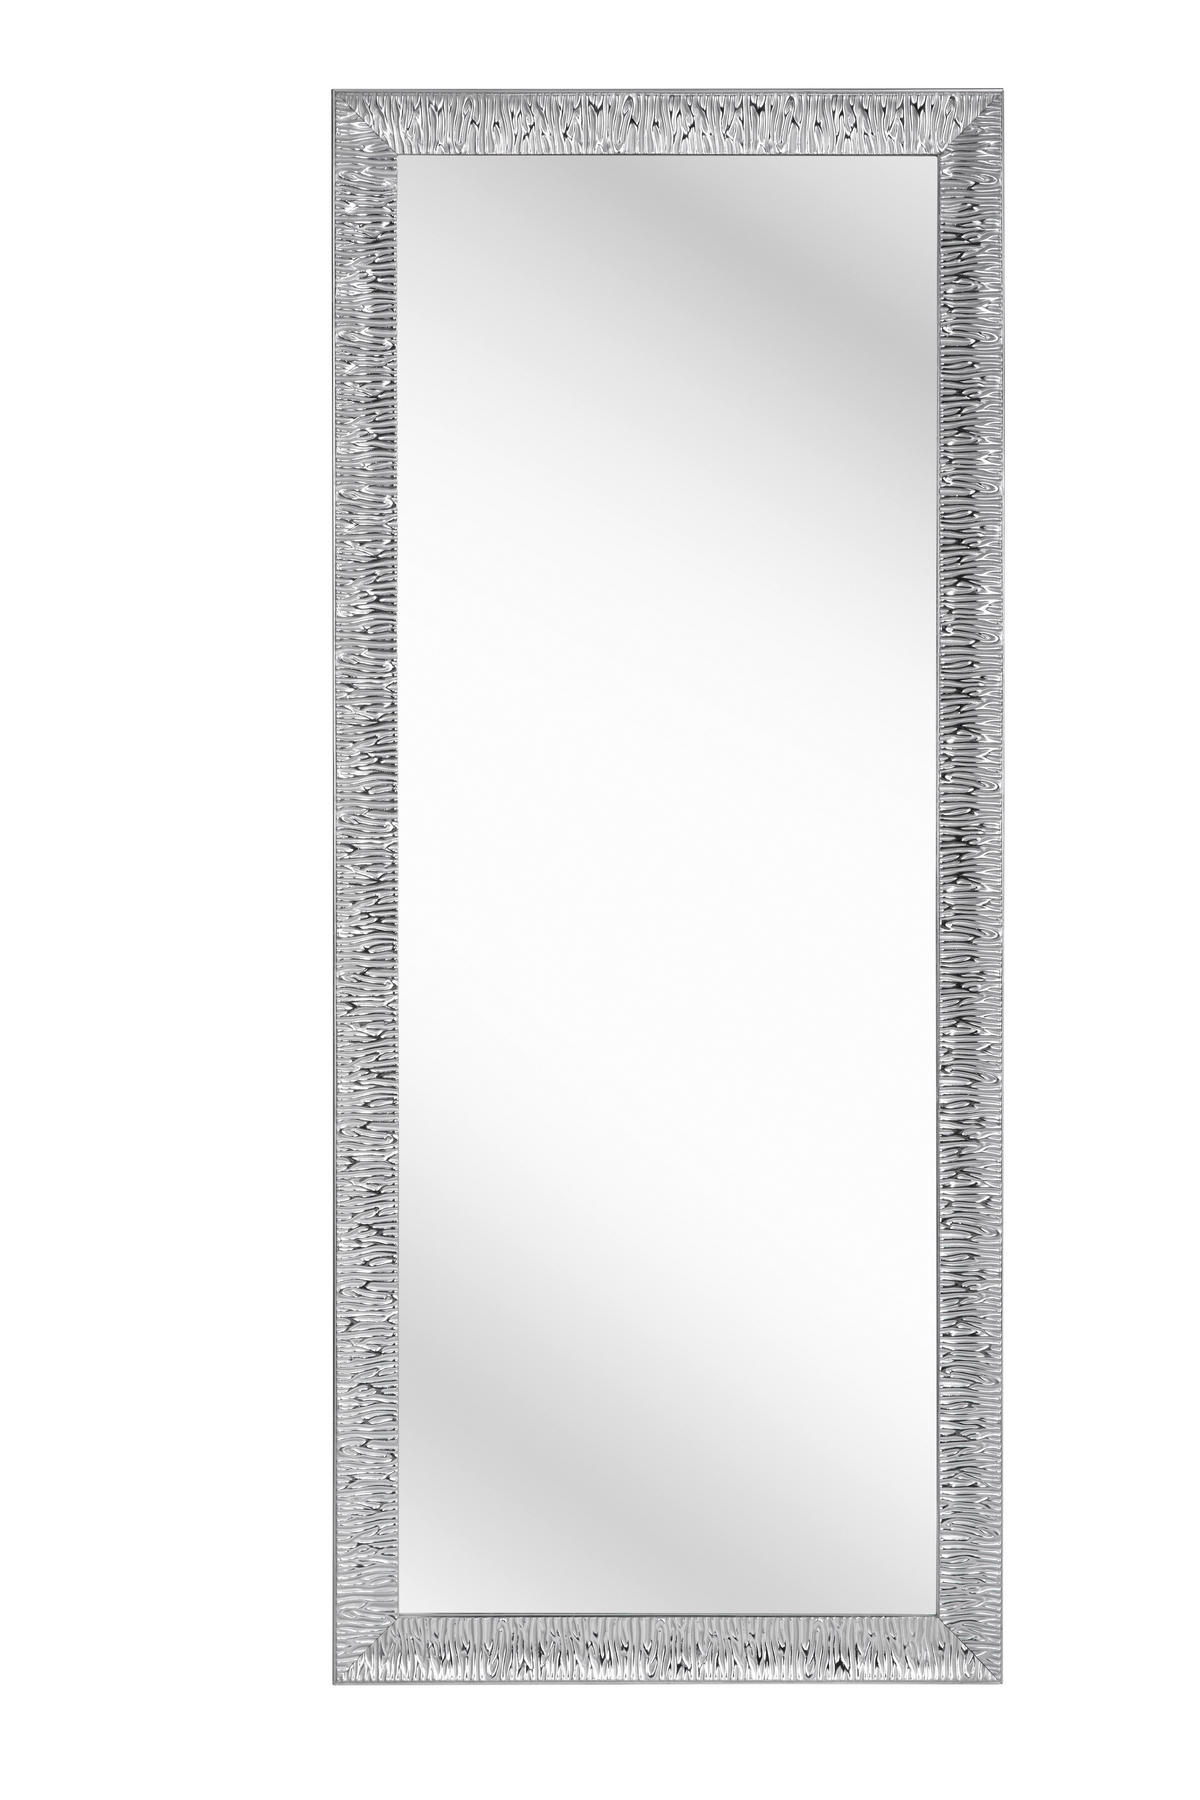 WANDSPIEGEL 70/170/3 cm    - Silberfarben, LIFESTYLE, Glas/Holz (70/170/3cm) - Xora